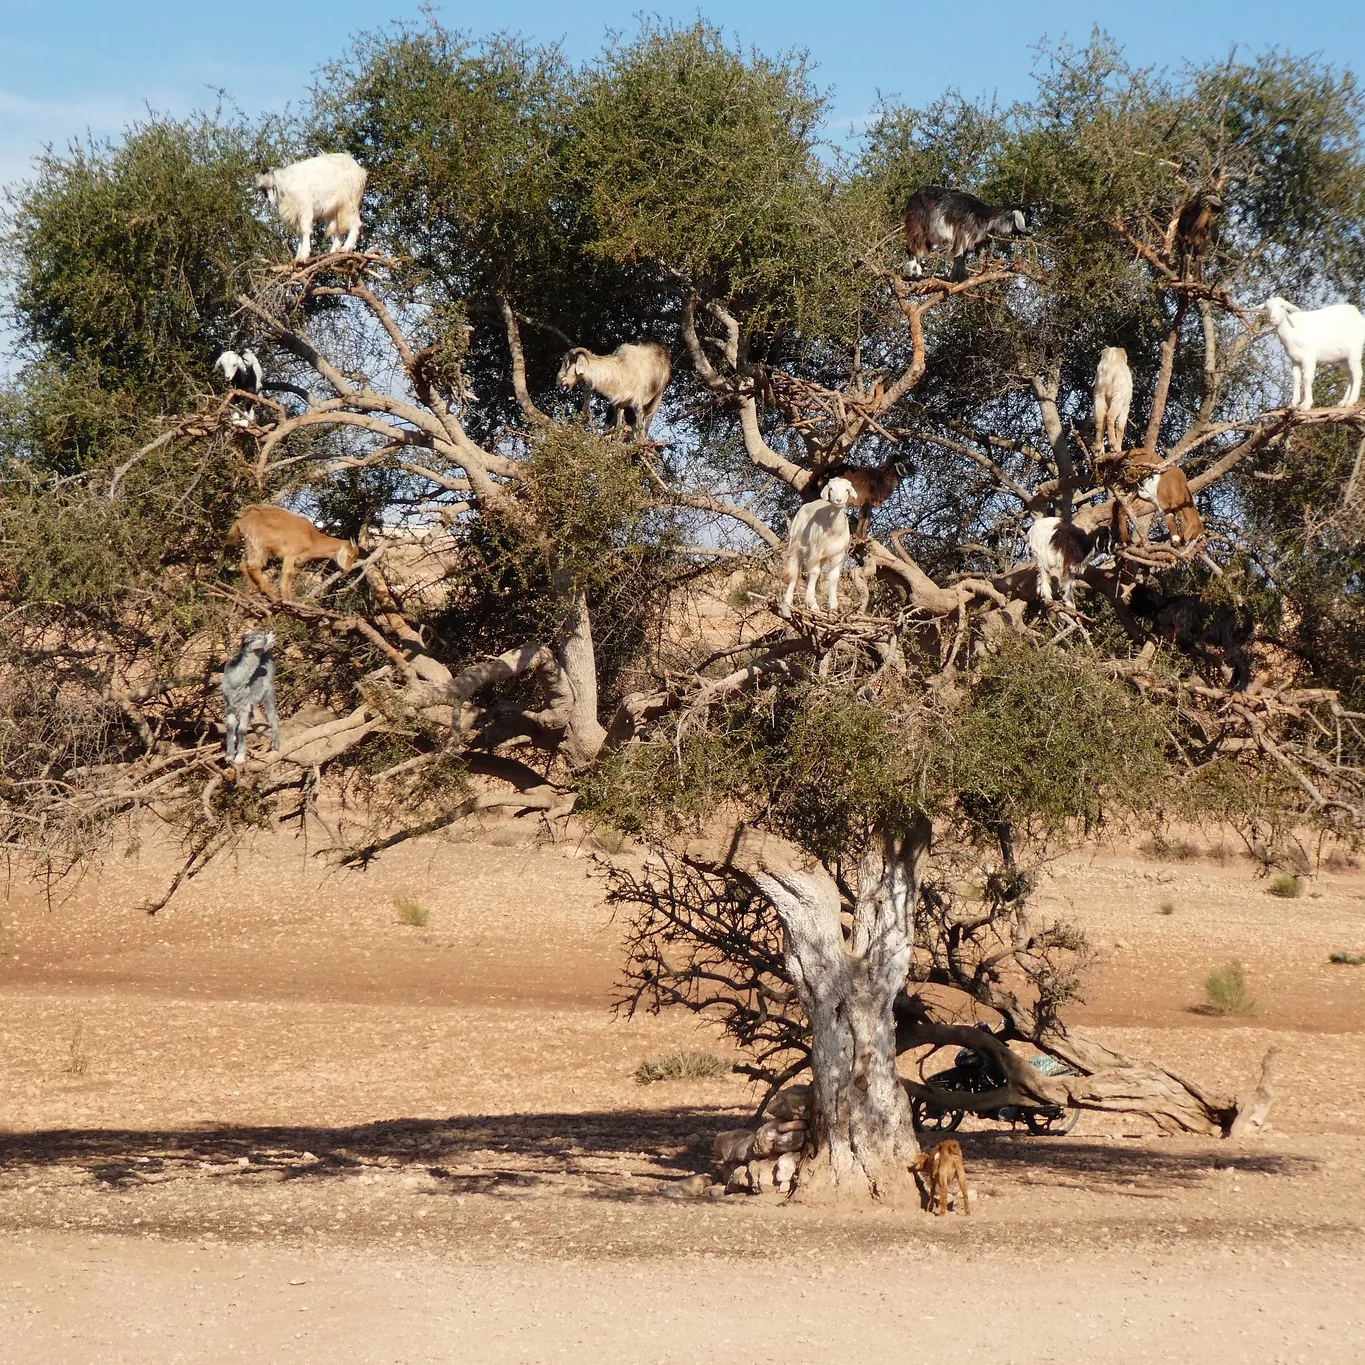 Goats in Argan tree